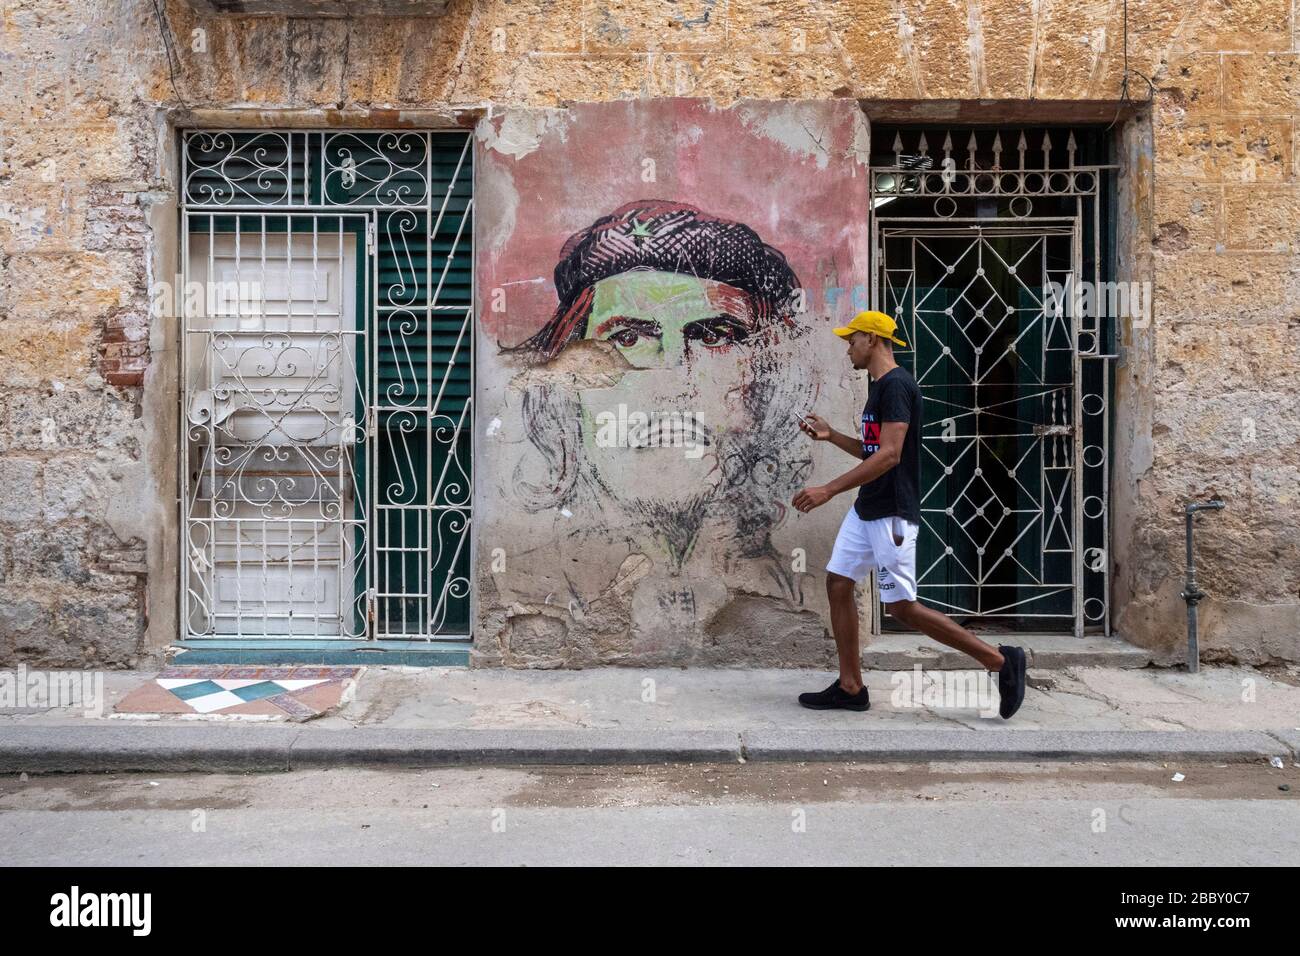 Young man walking by street art mural, Old Havana Stock Photo